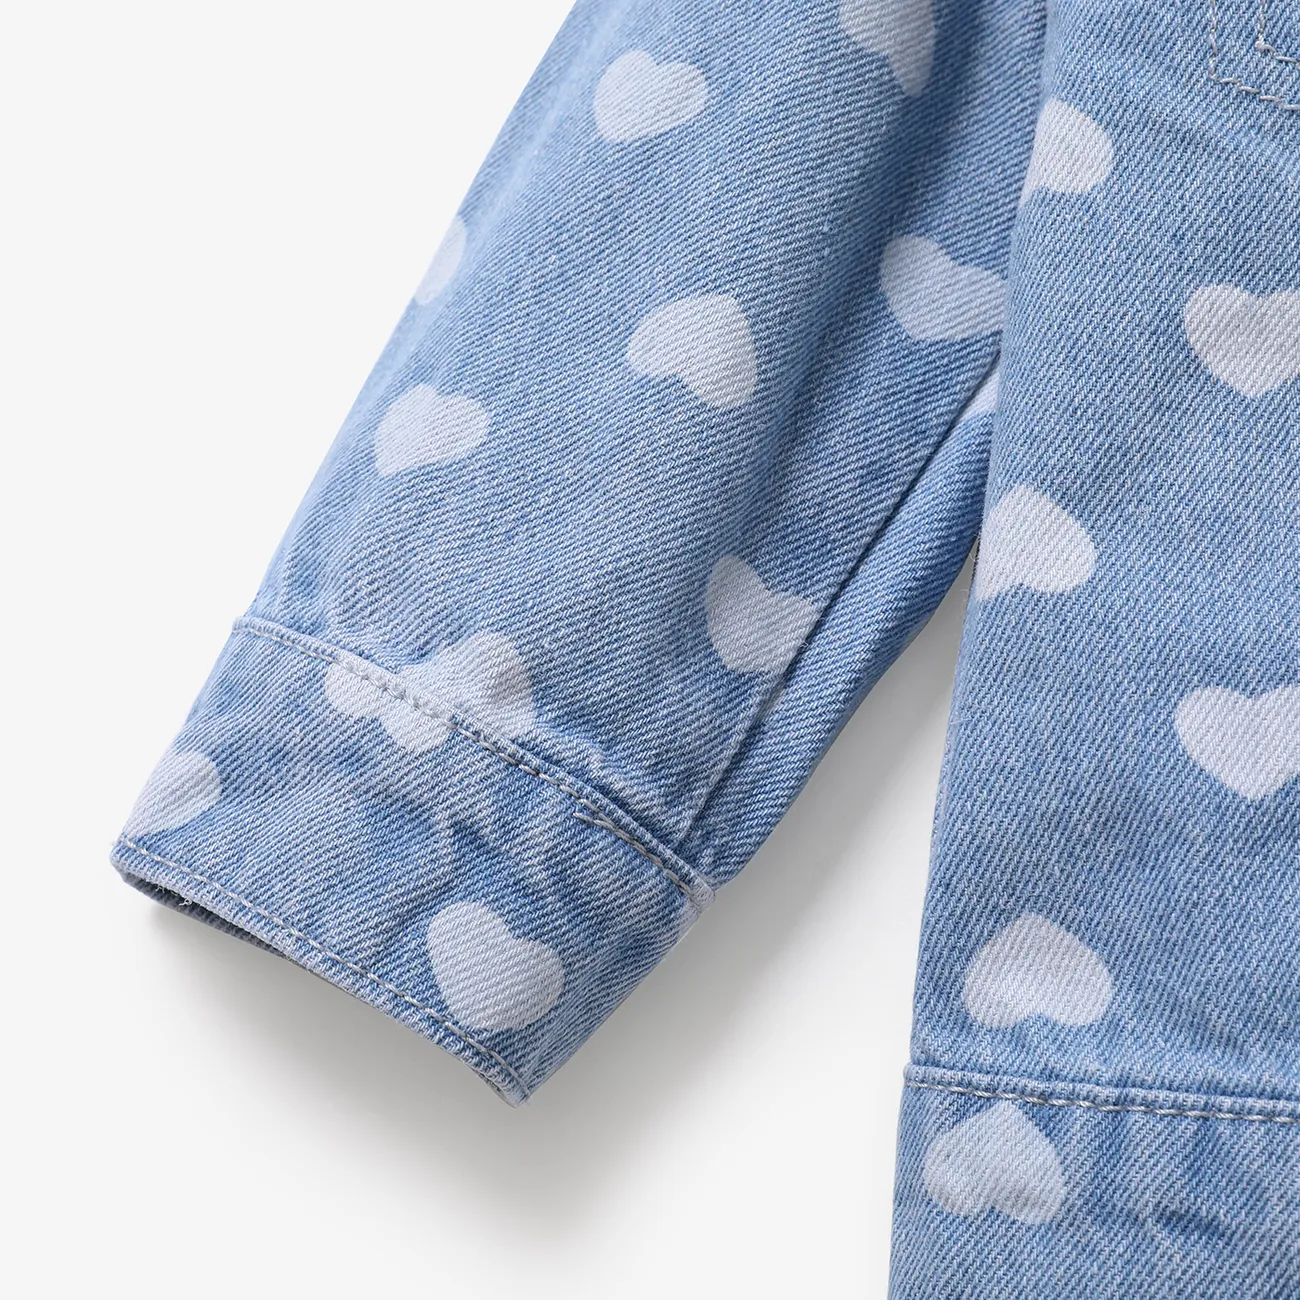  Baby Girl Sweet Heart-shaped Pattern Denim Jacket  Blue big image 1